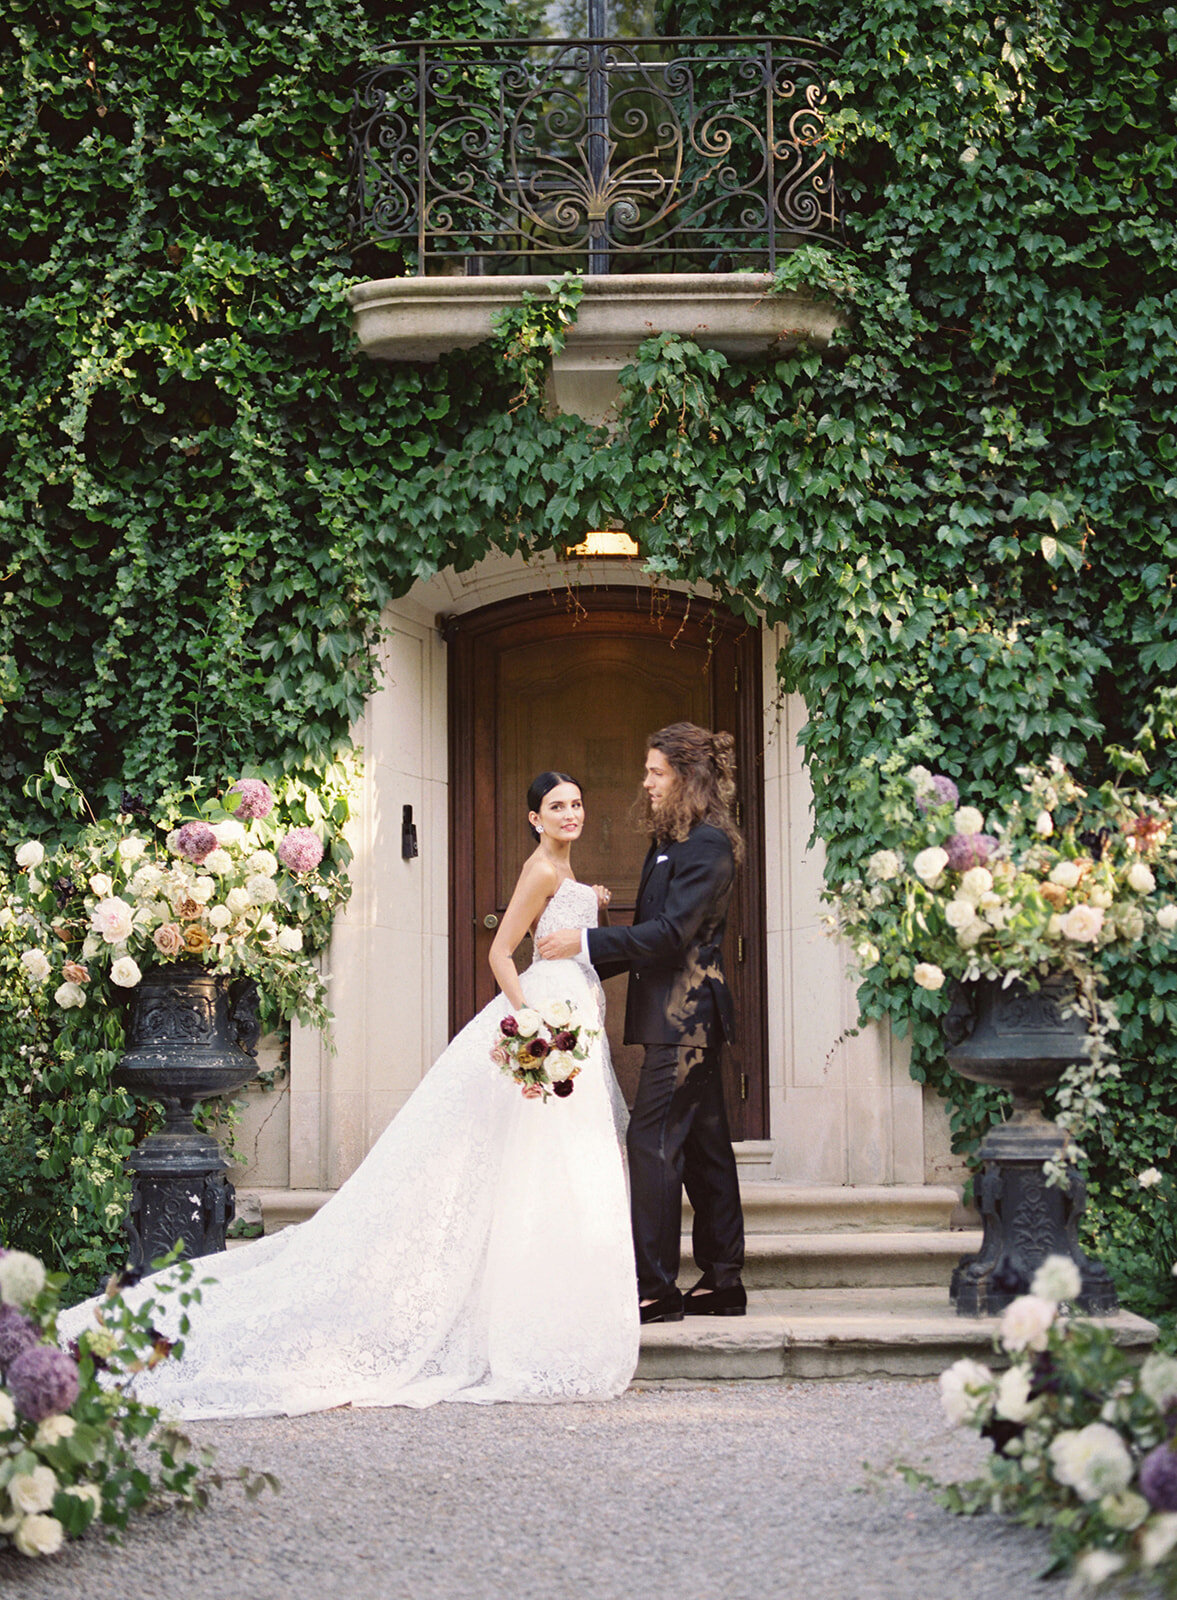 Greencrest Manor - Battle Creek Michigan Wedding Venues - Stephanie Michelle Photography - _stephaniemichellephotog2-R1-E013